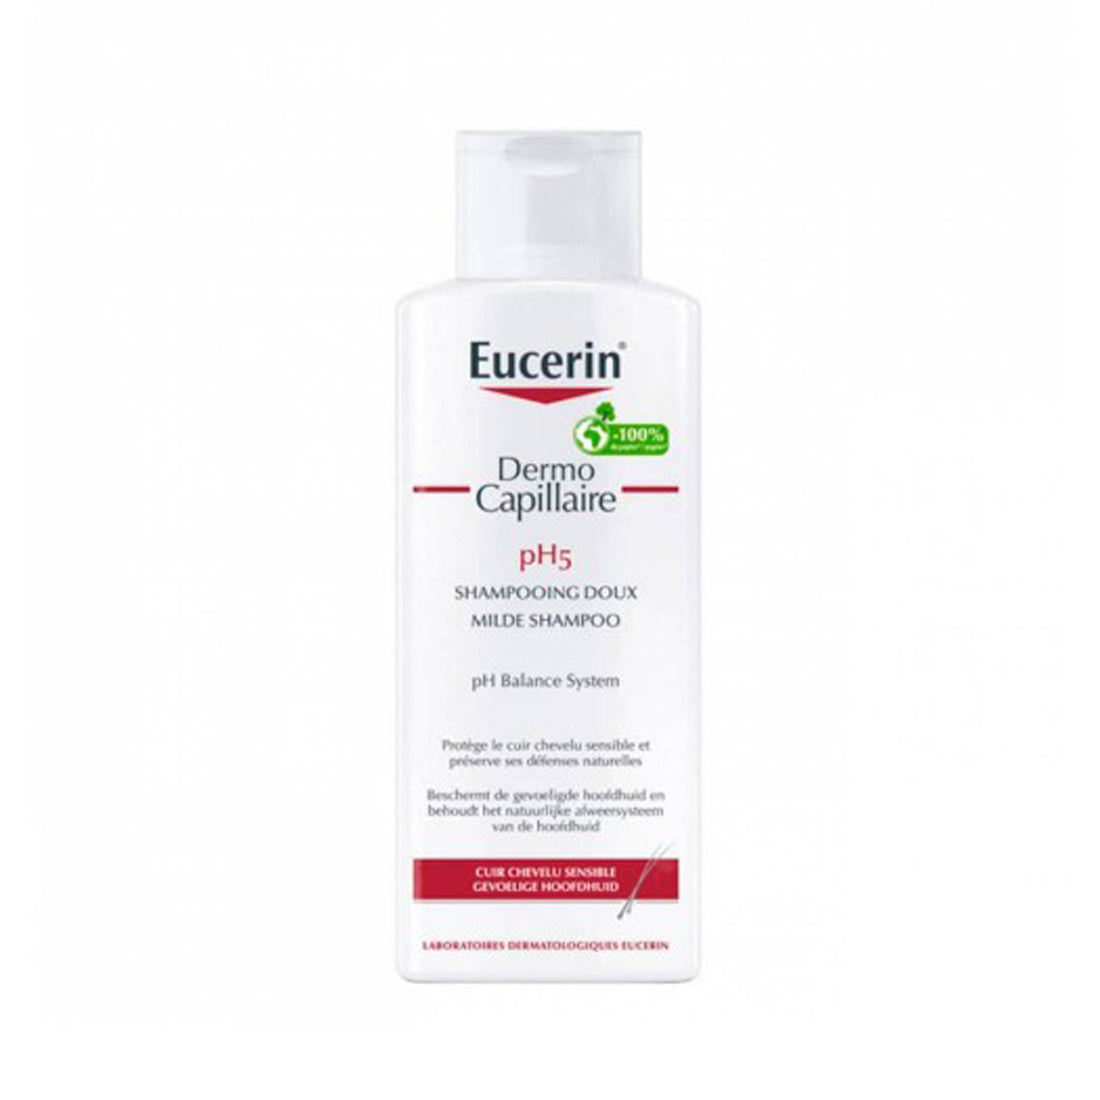 Eucerin DermoCapillaire pH5 Mild Shampoo 250ml (8.45fl oz)